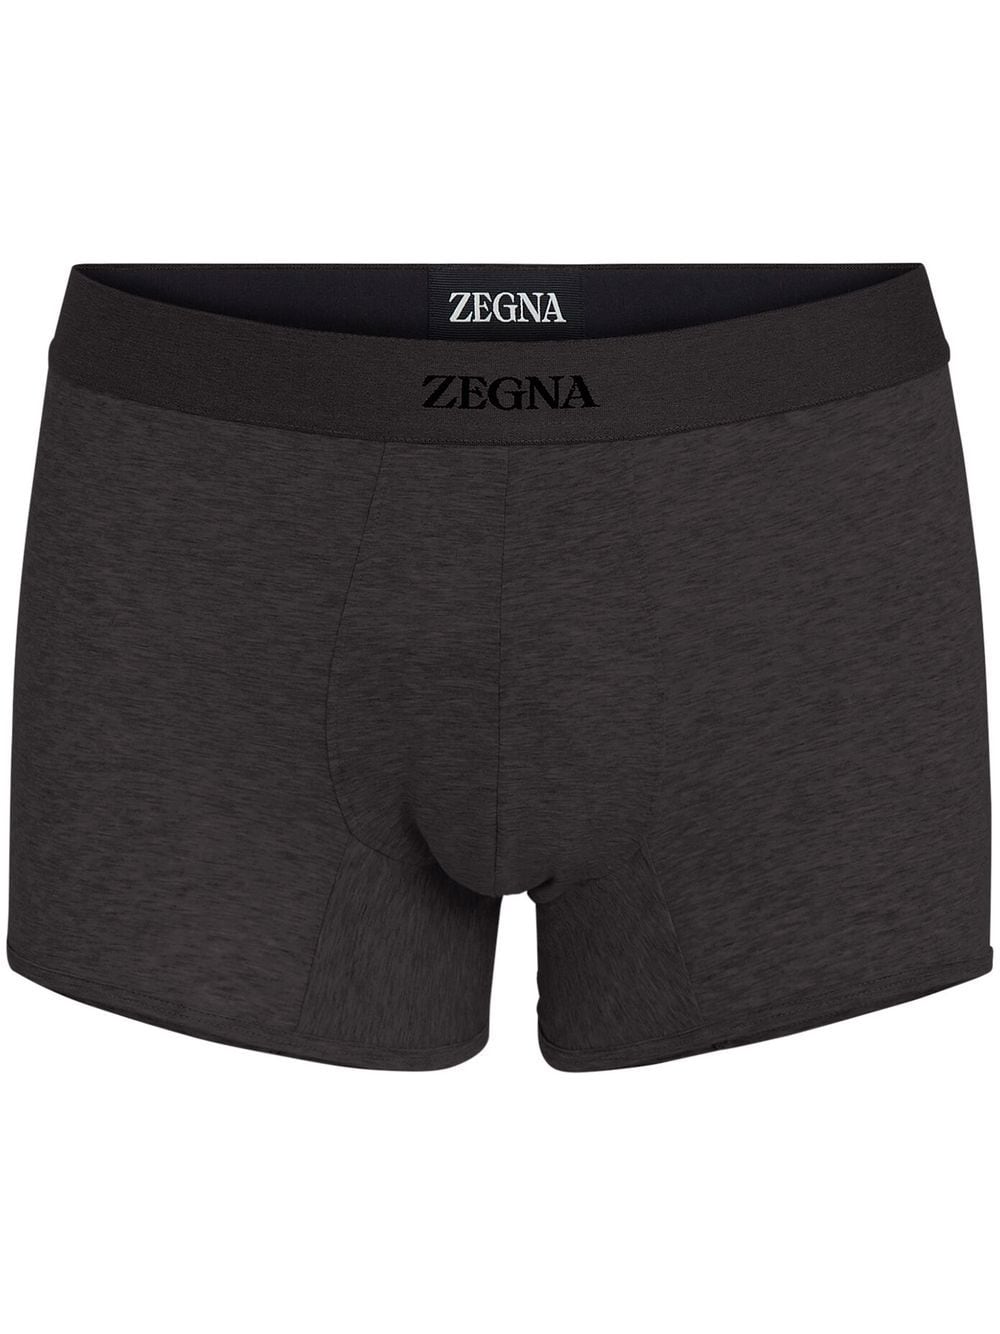 Zegna logo-waistband cotton boxers - Black von Zegna